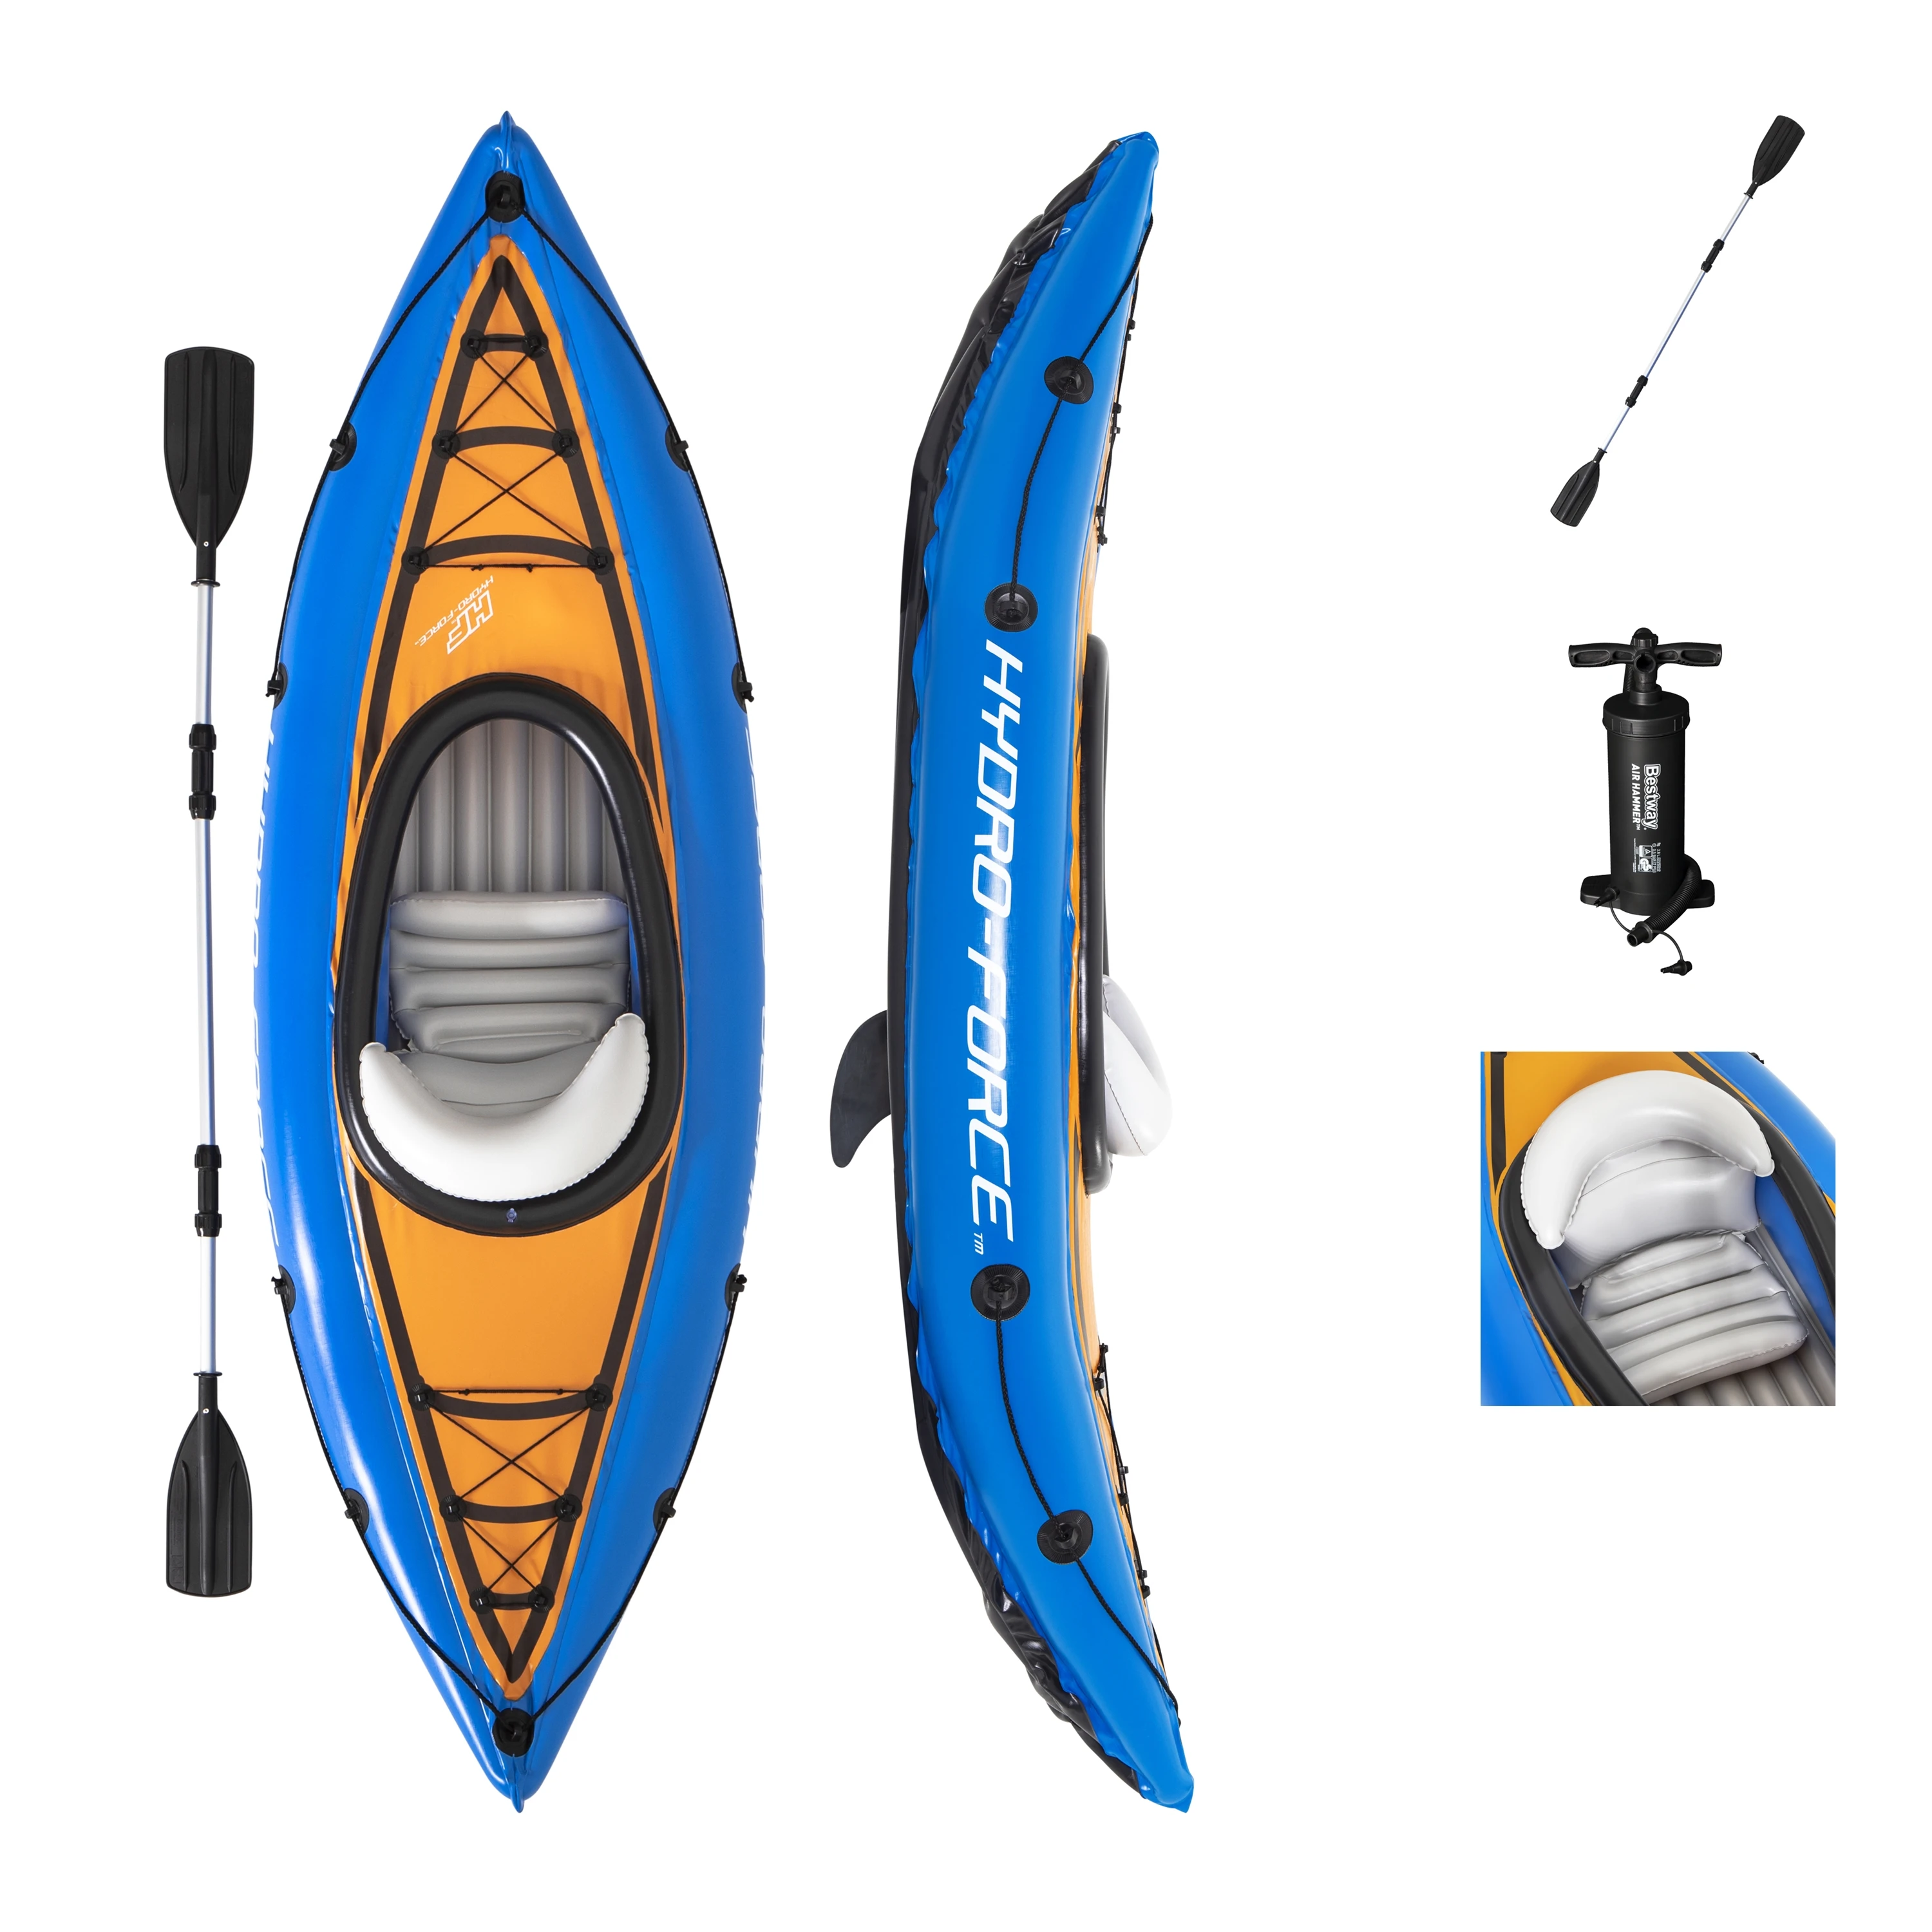 

Bestway 65115 Cove Champion Inflatable Kayak Set inflatable Fishing Kayak, Blue